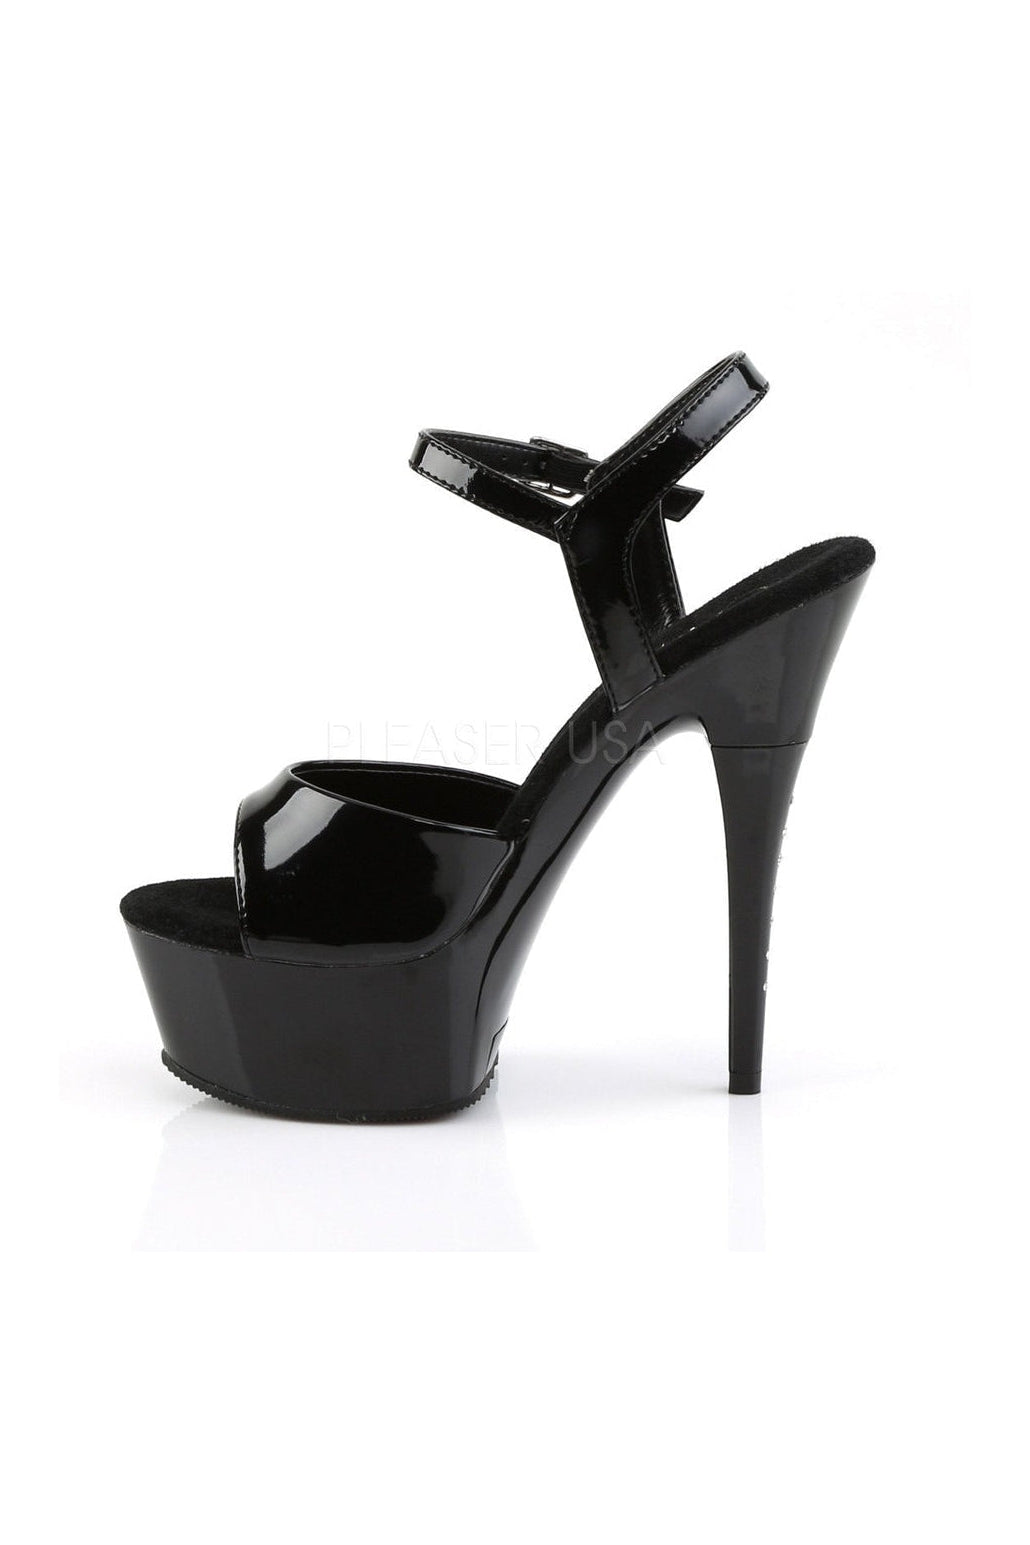 CAPTIVA-609 Platform Sandal | Black Patent-Pleaser-Sandals-SEXYSHOES.COM